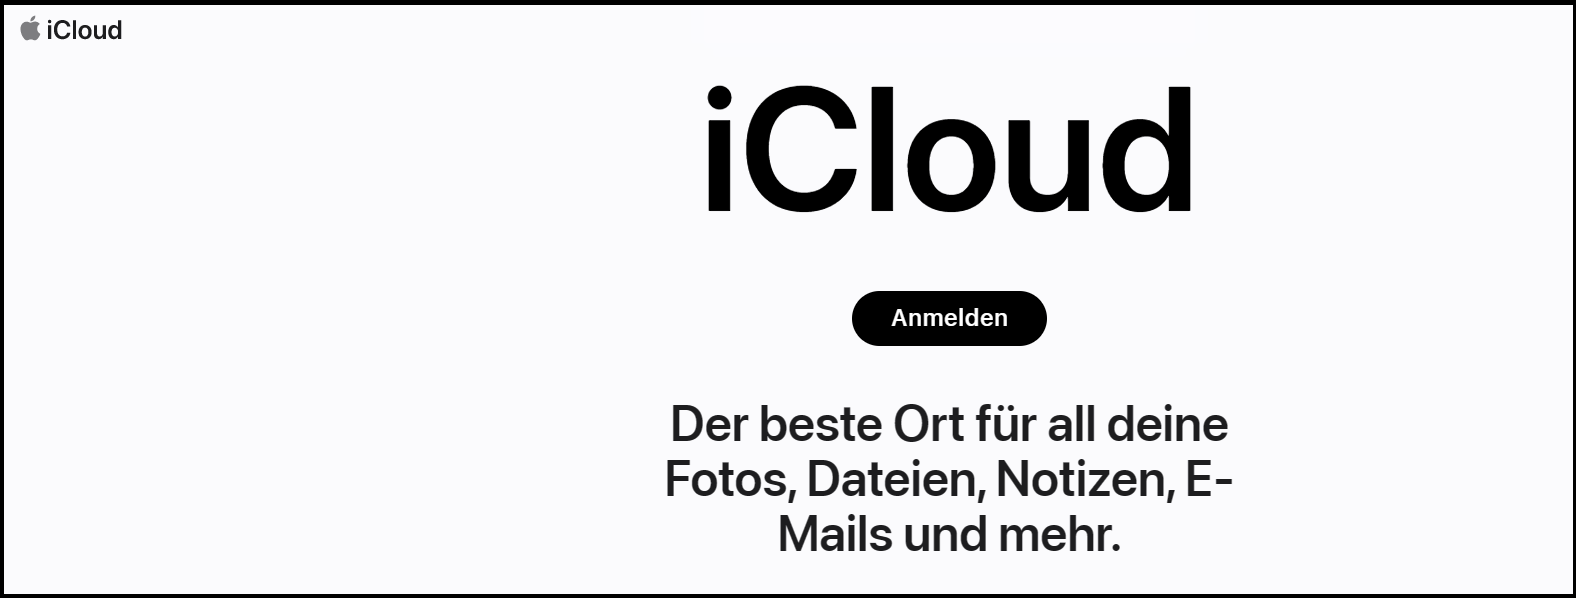 Der Webclient von Apples iCloud